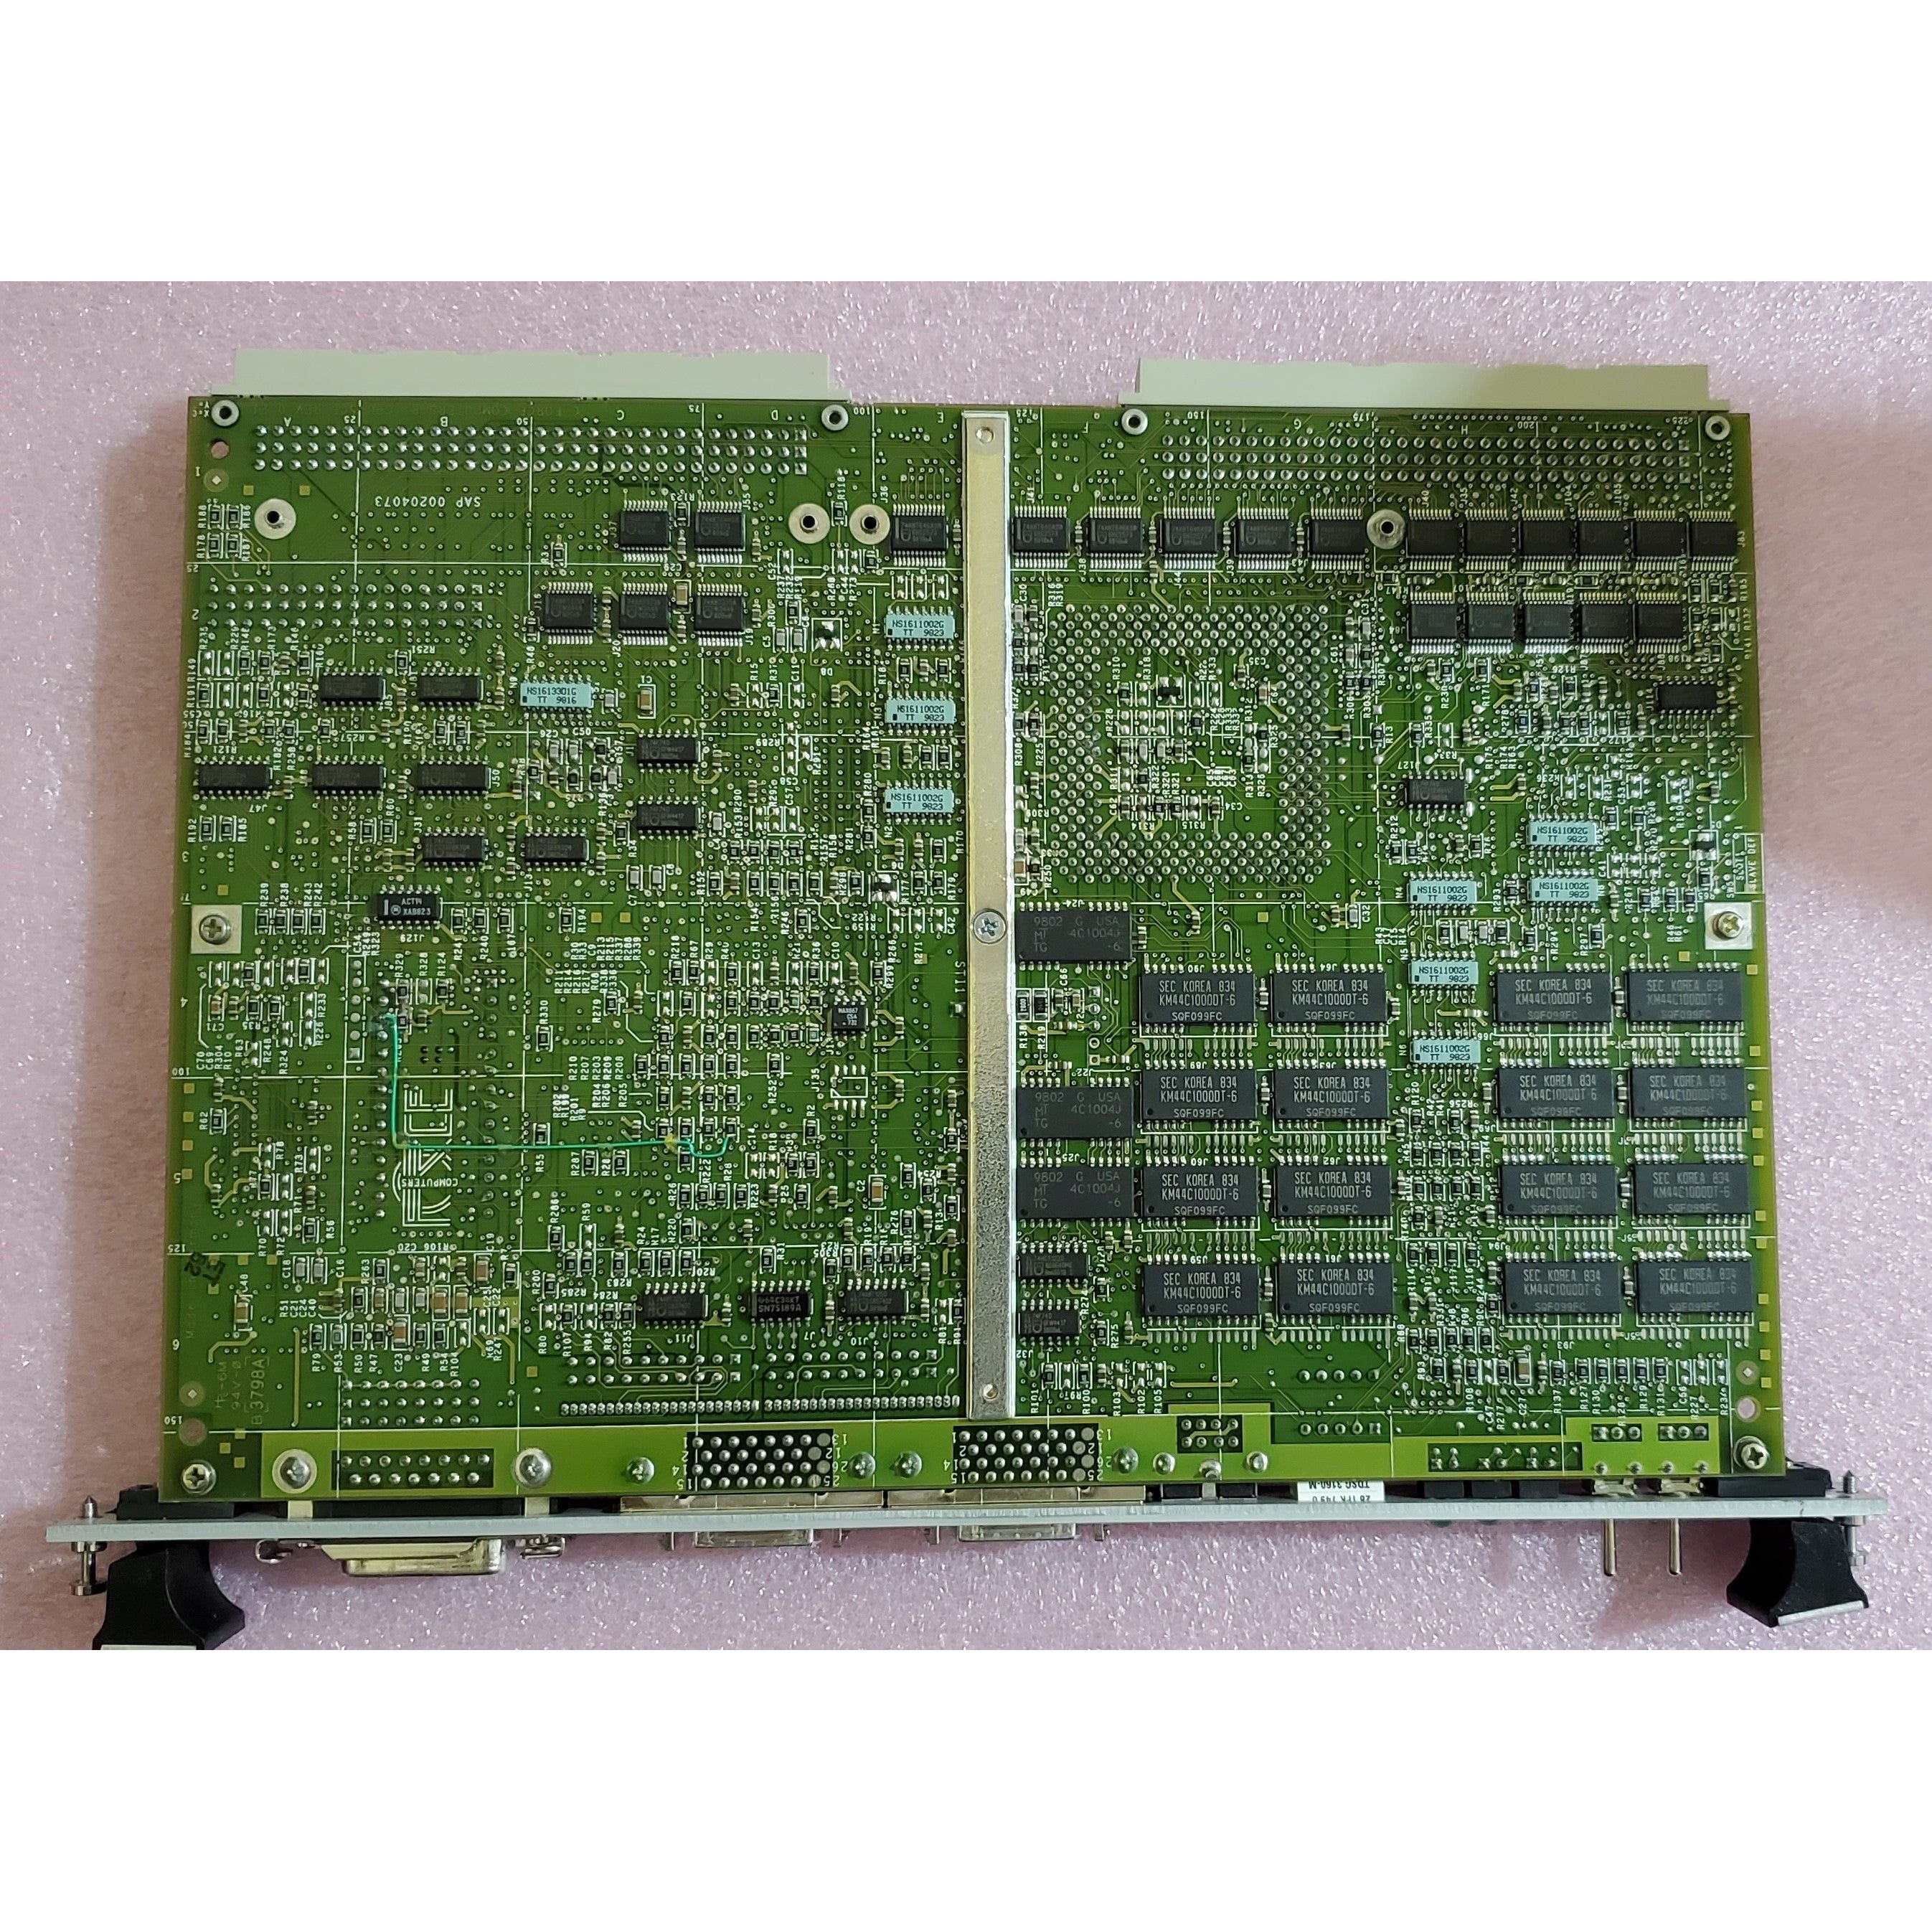 CPU-5CE/16-85-2 |力计算机